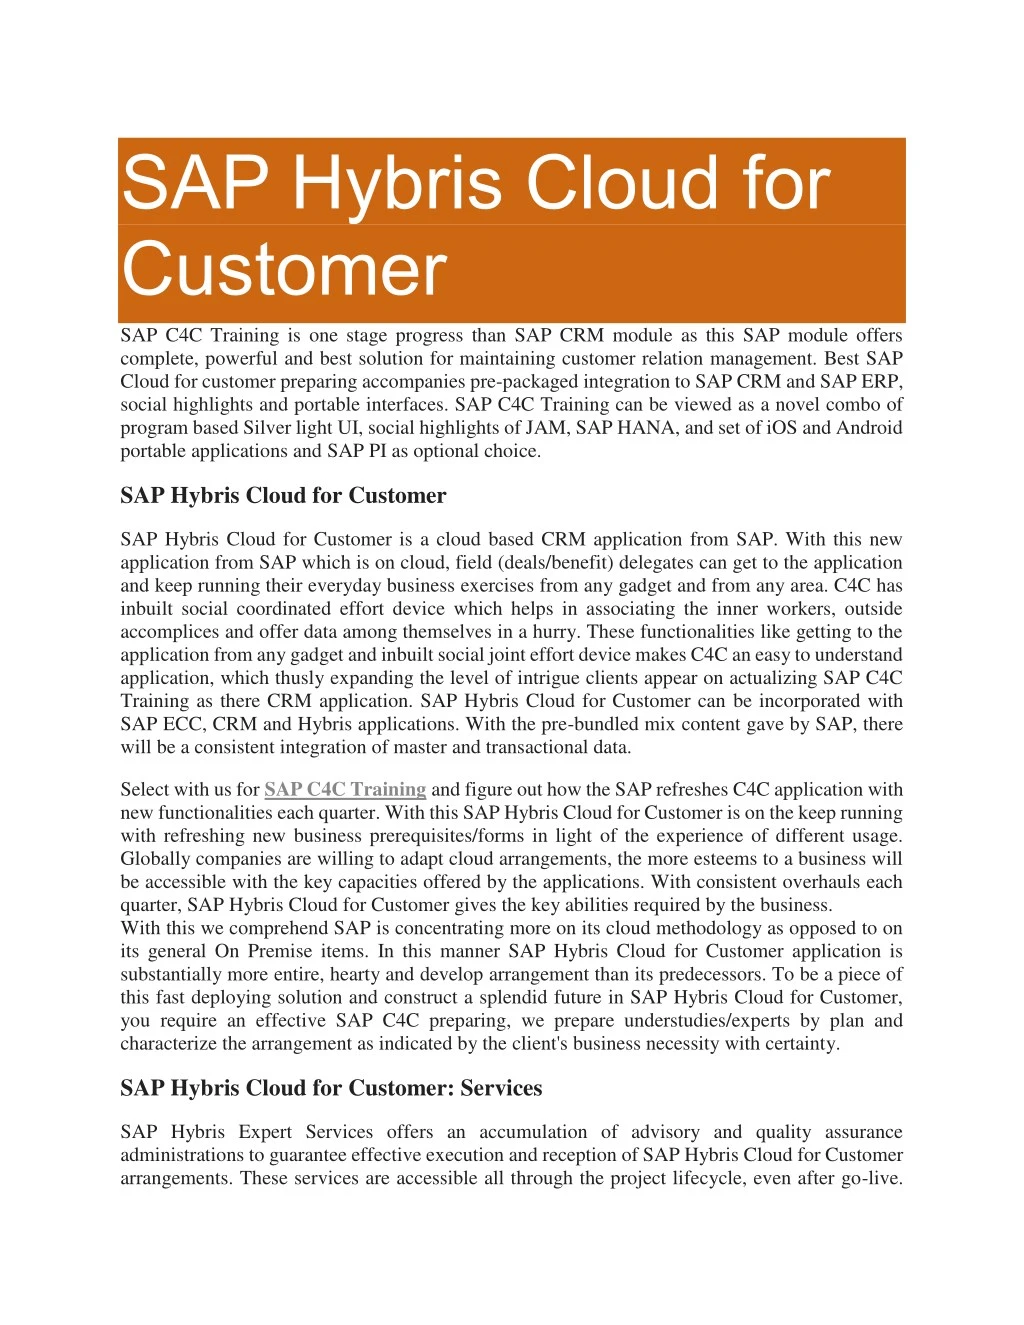 sap hybris cloud for customer